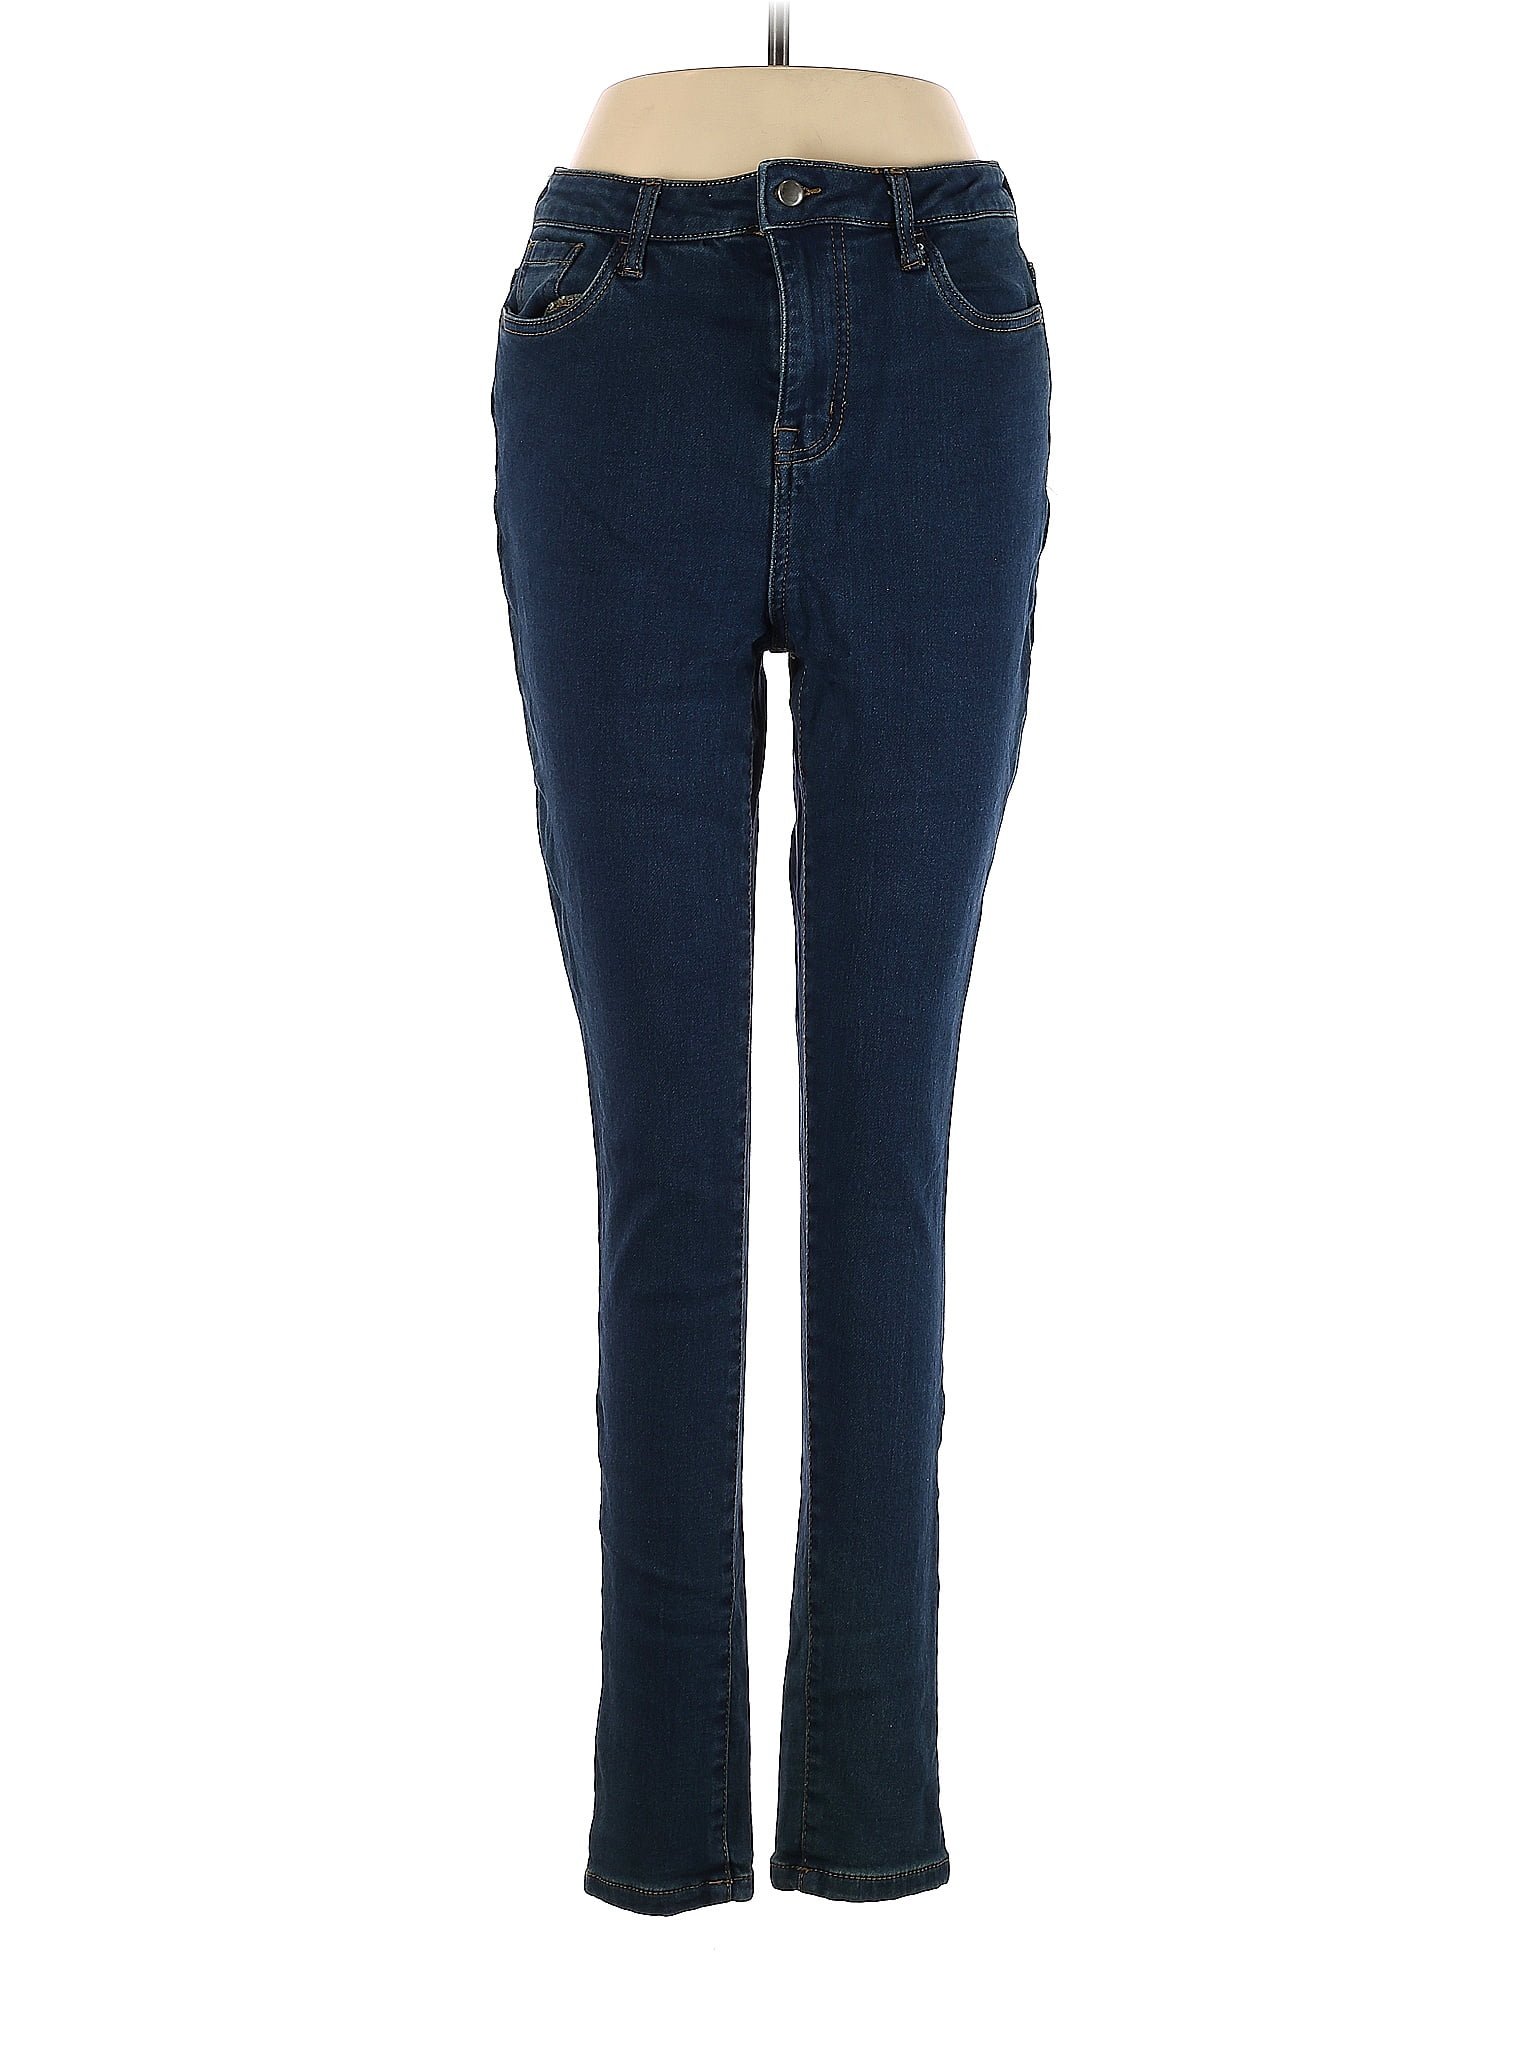 Serra Blue Jeans Size 6 - 48% off | thredUP